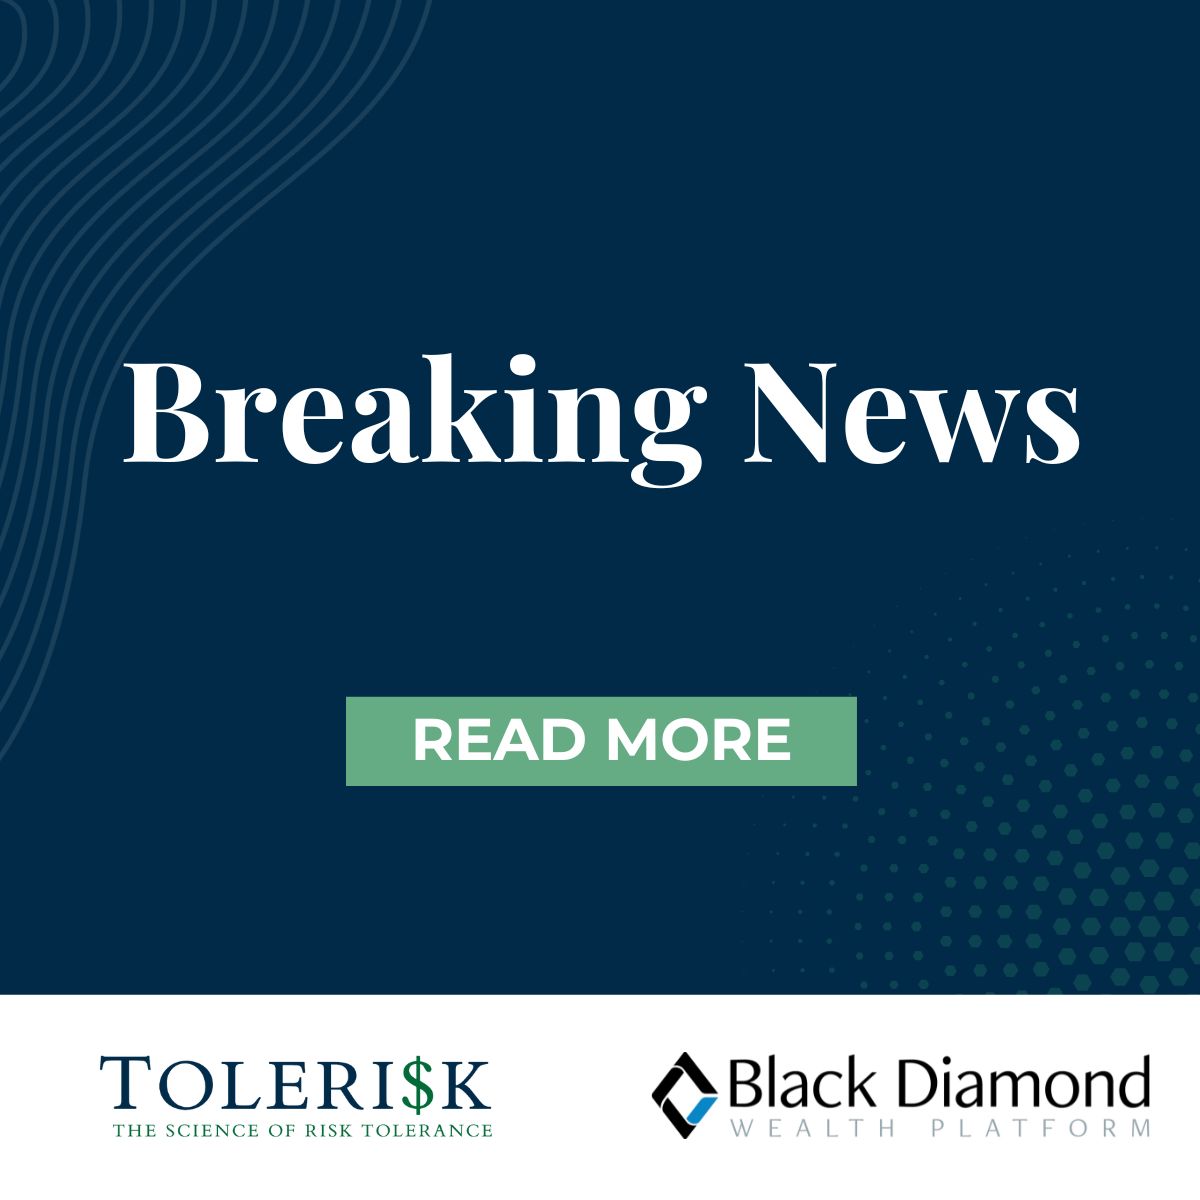 Tolerisk Enhances Integration With SS&C’s Black Diamond Wealth Platform